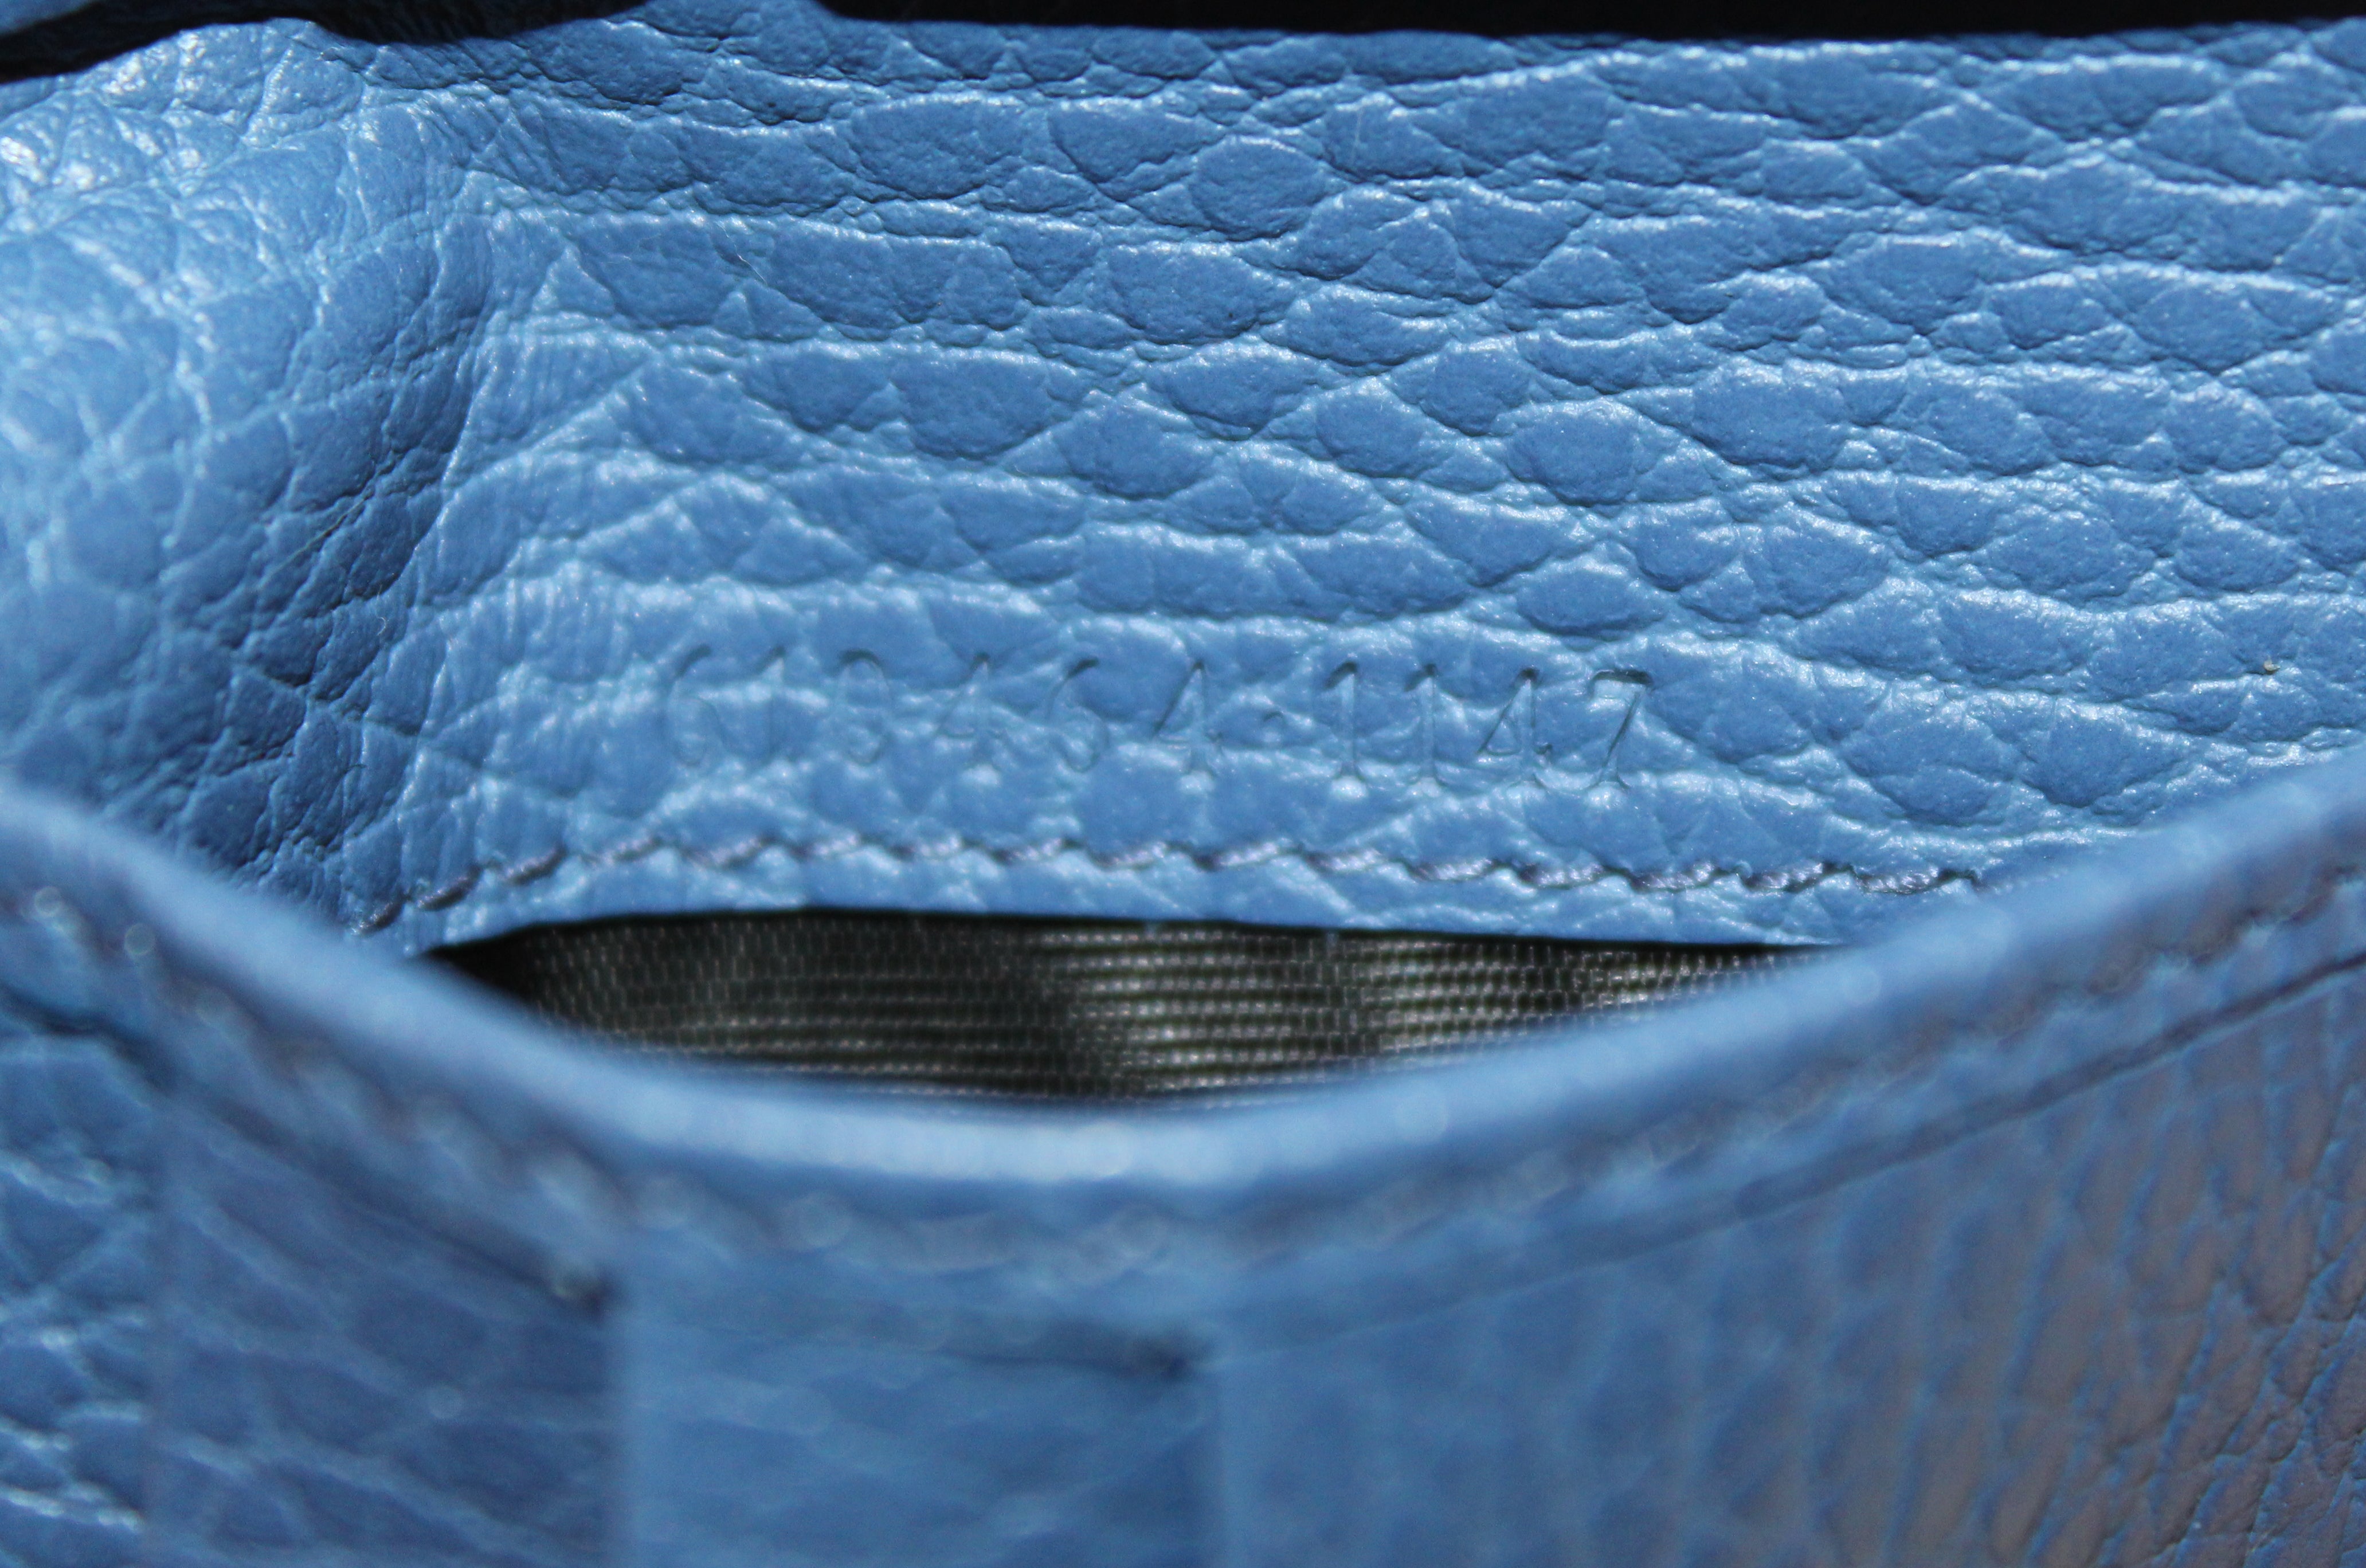 New Authentic Gucci Black Men's Leather Bi-Fold Wallet 610464